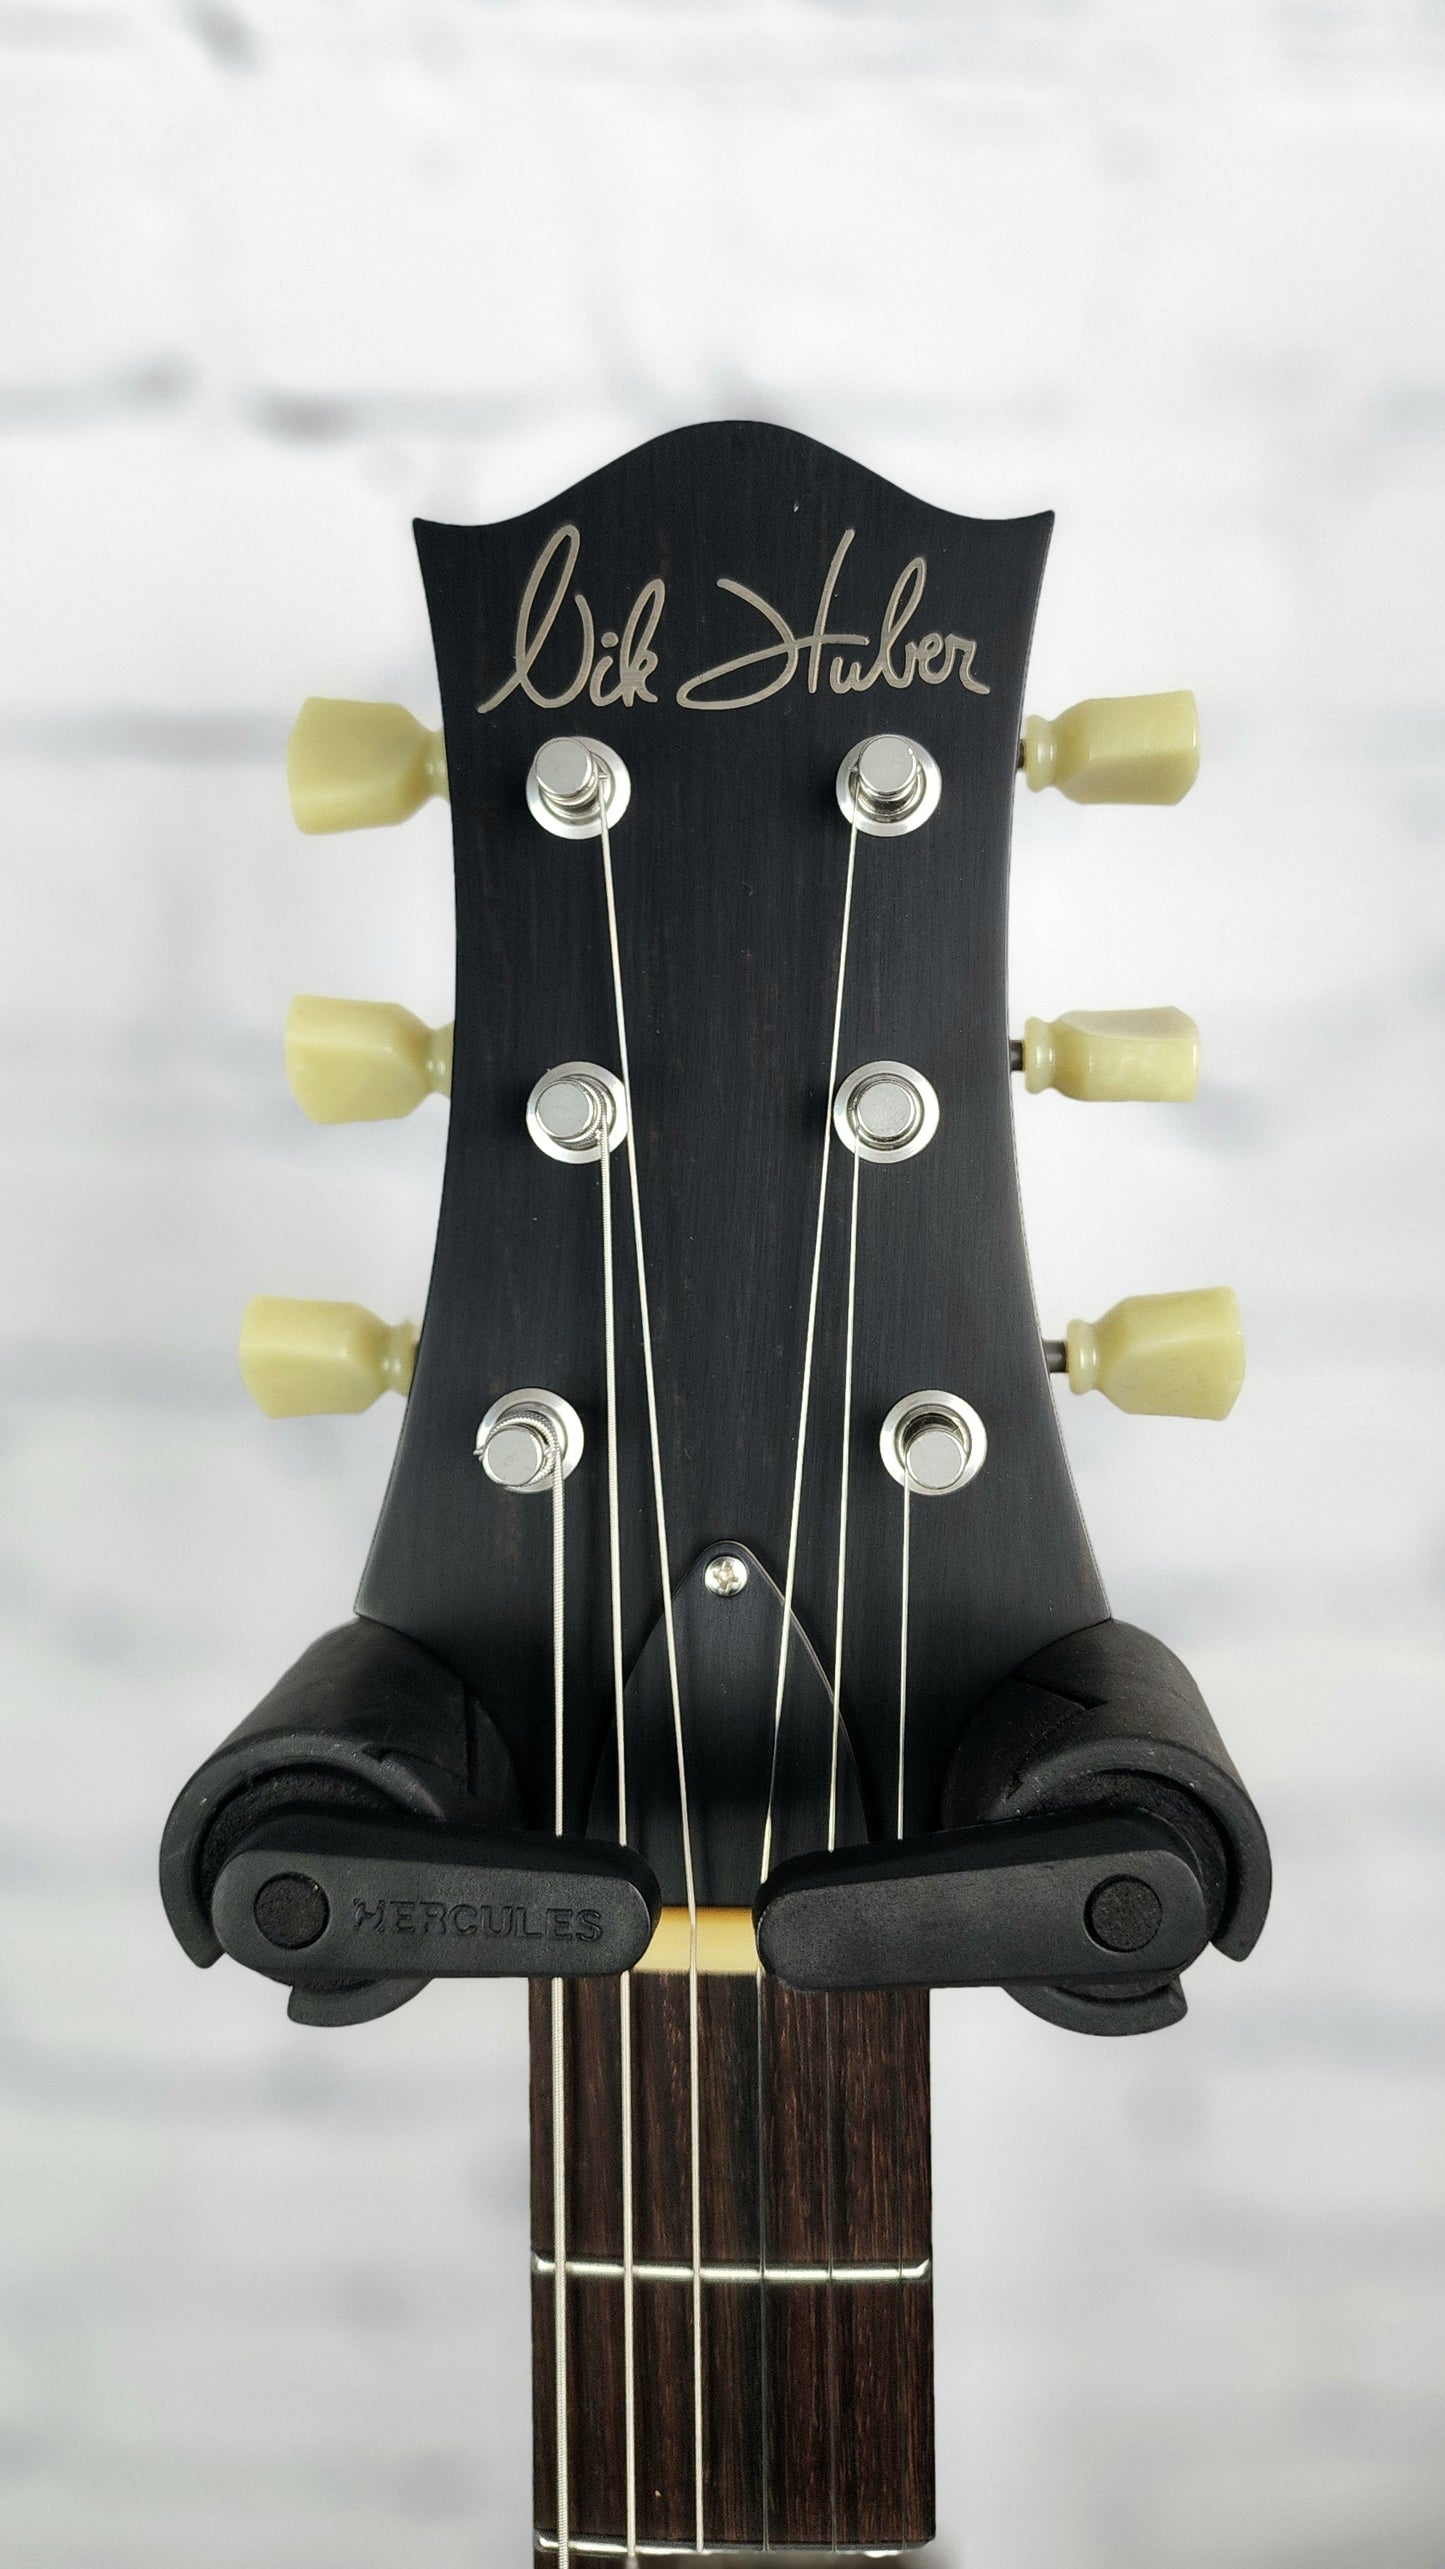 Nik Huber Krautster II Single Cut Electric Guitar Custom Worn Onyx Black